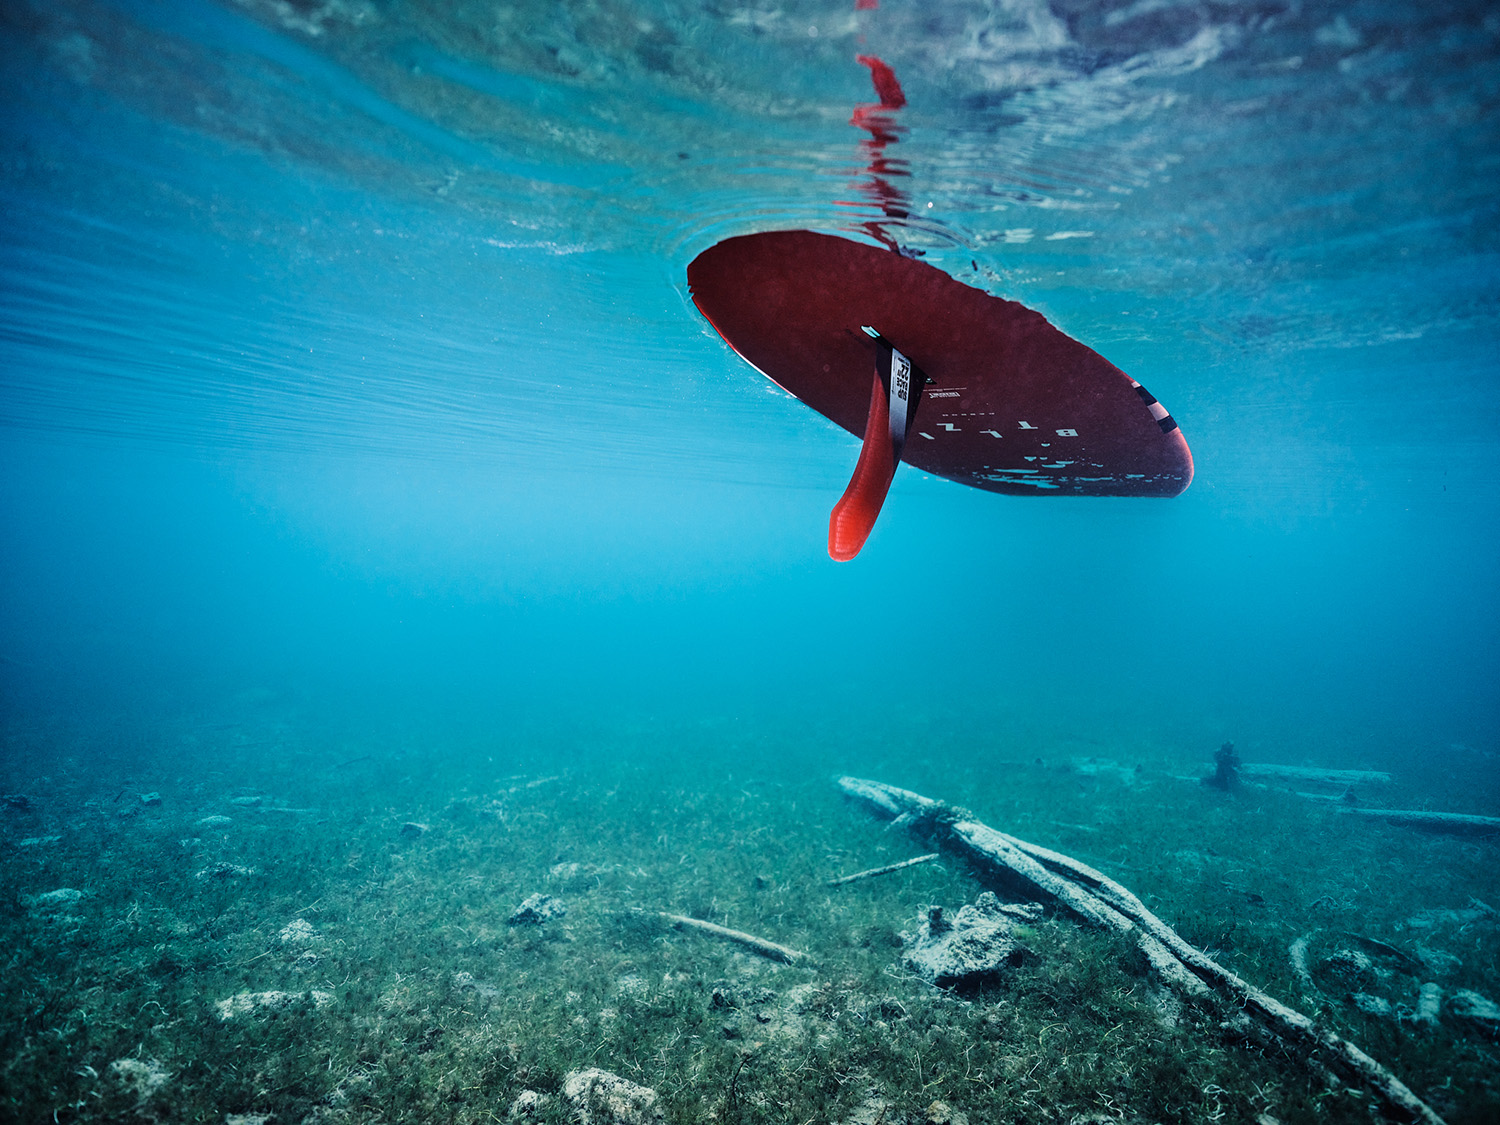 Underwater shot of a canoe